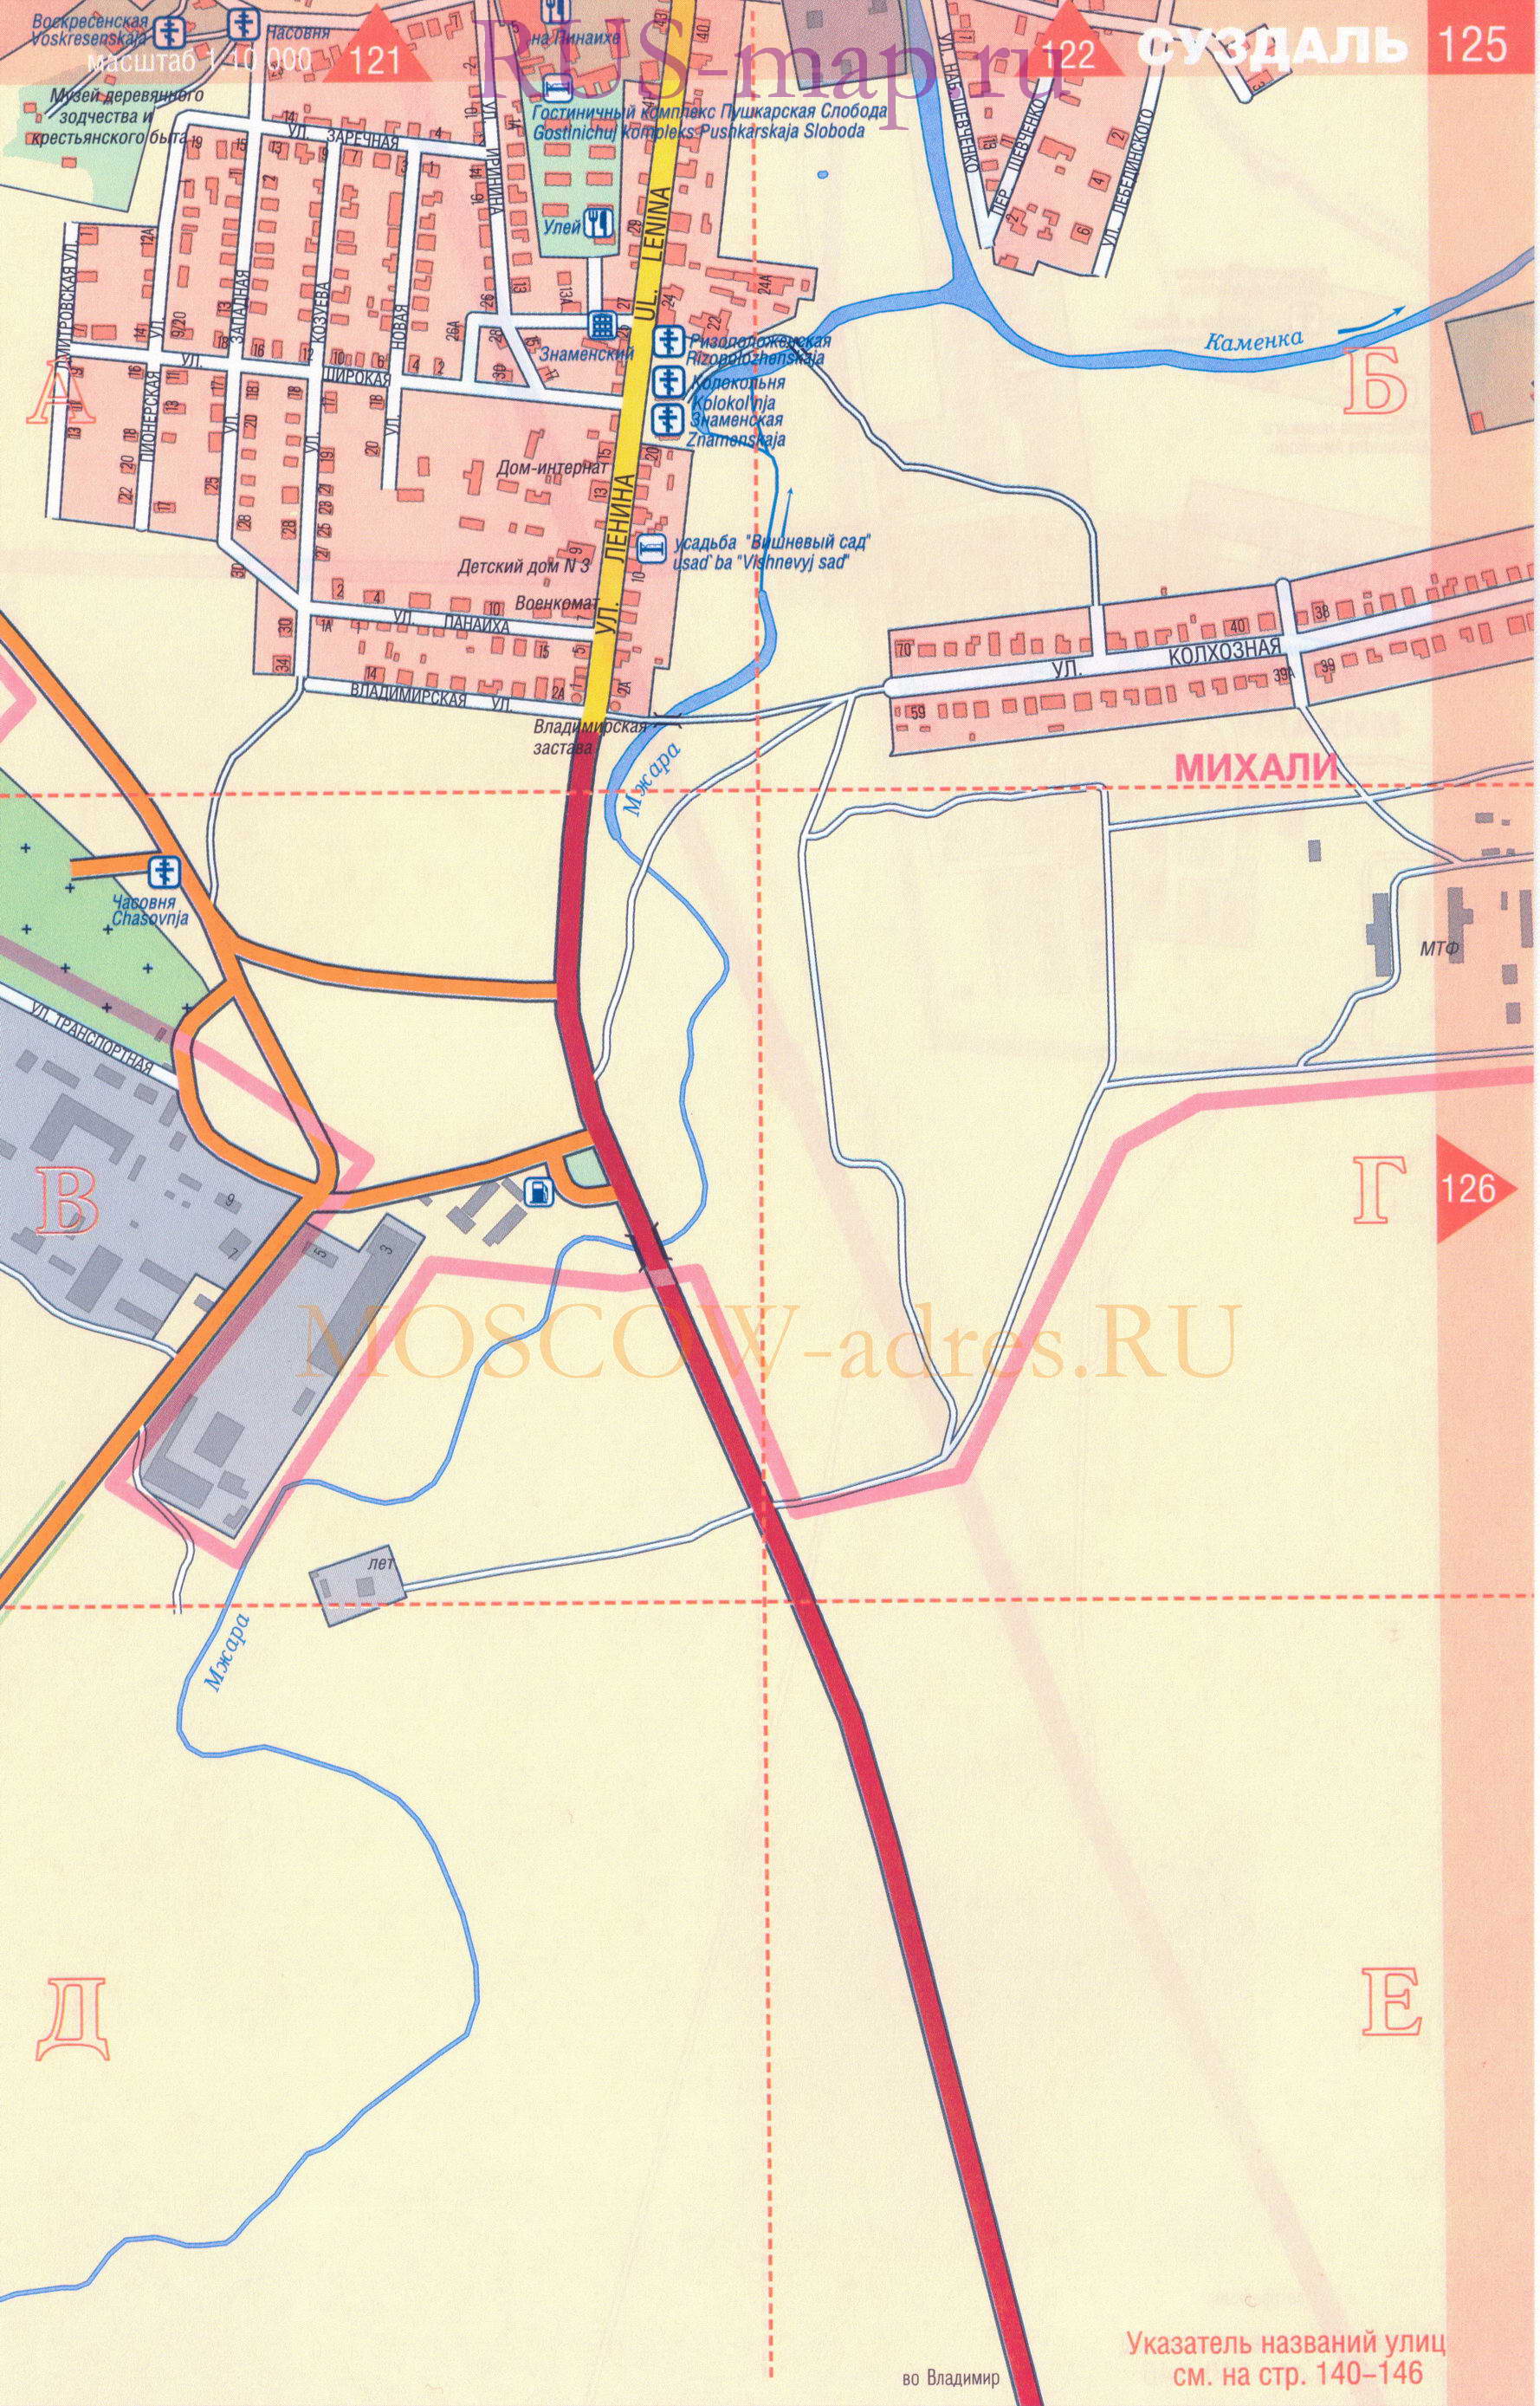 Суздаль. Крупномасштабная карта города Суздаль масштаба 1см:100м, показаны все церкви, музеи, гостиницы, B2 - 